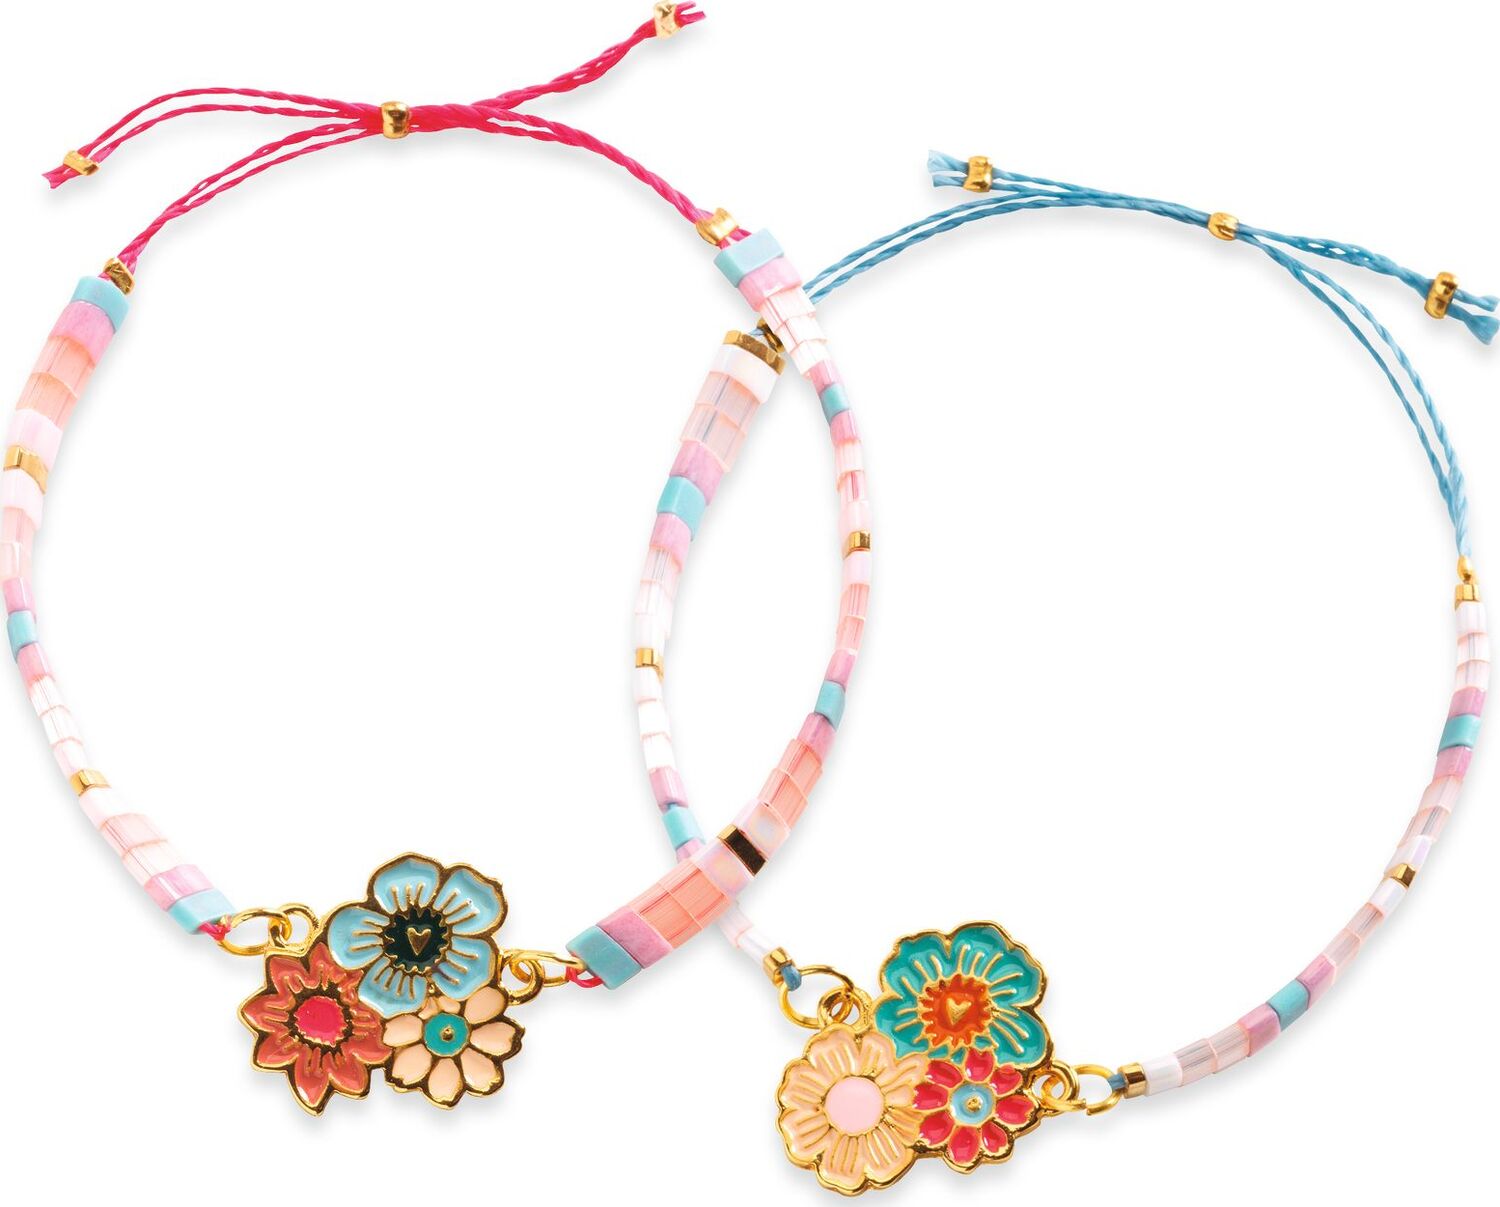 DJECO Tila and Flowers Beads & Jewelry